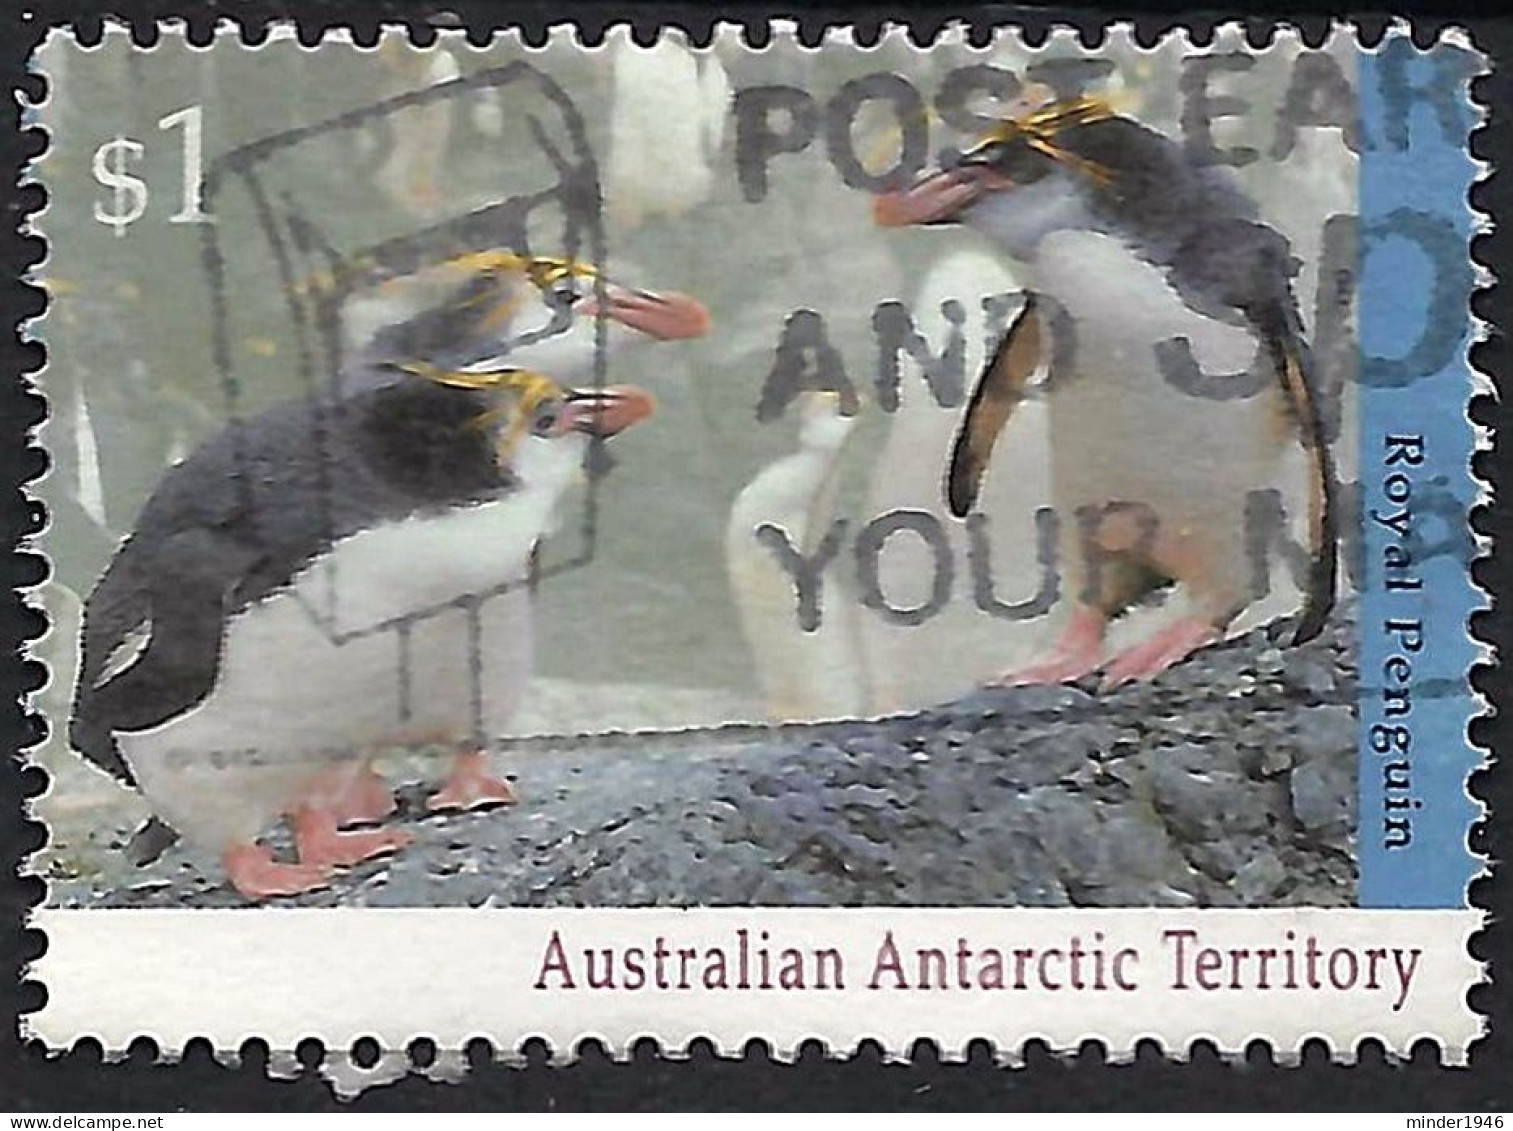 AUSTRALIAN ANTARCTIC TERRITORY (AAT) 1992 QEII $1 Multicoloured, Wildlife-Royal Penguin SG94 Used - Gebruikt